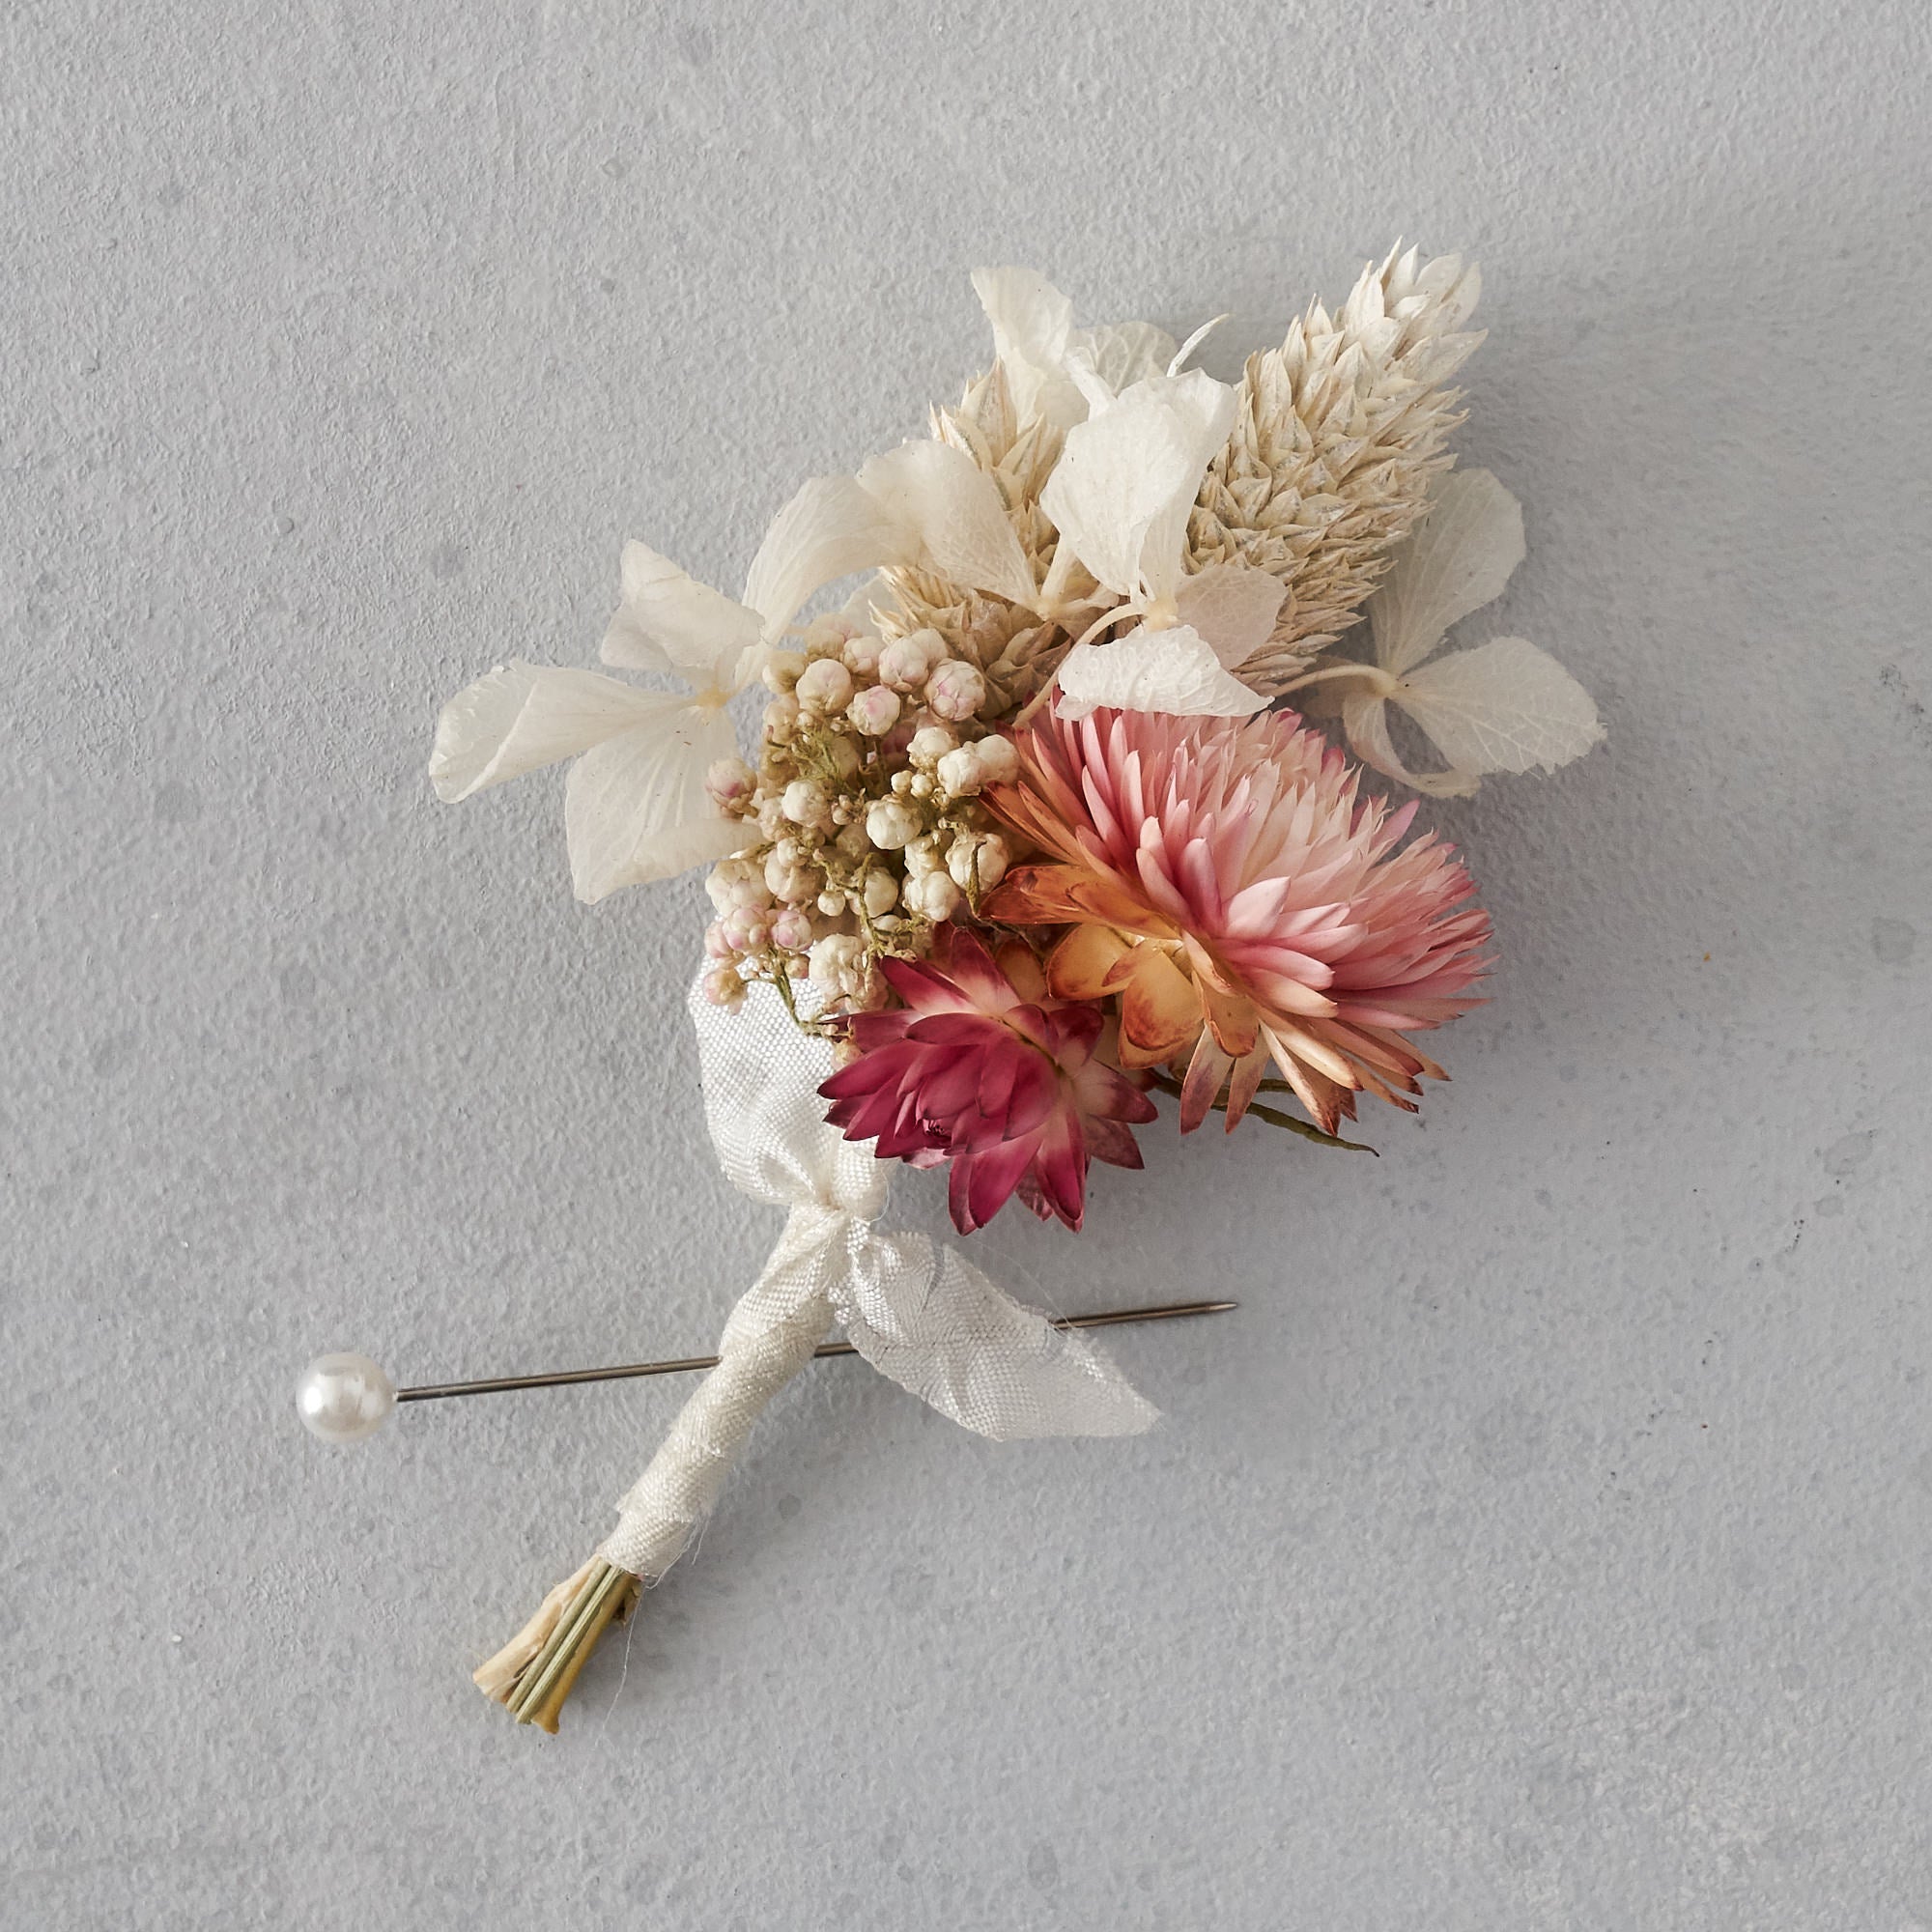 Dried flower buttonhole : dusty pink